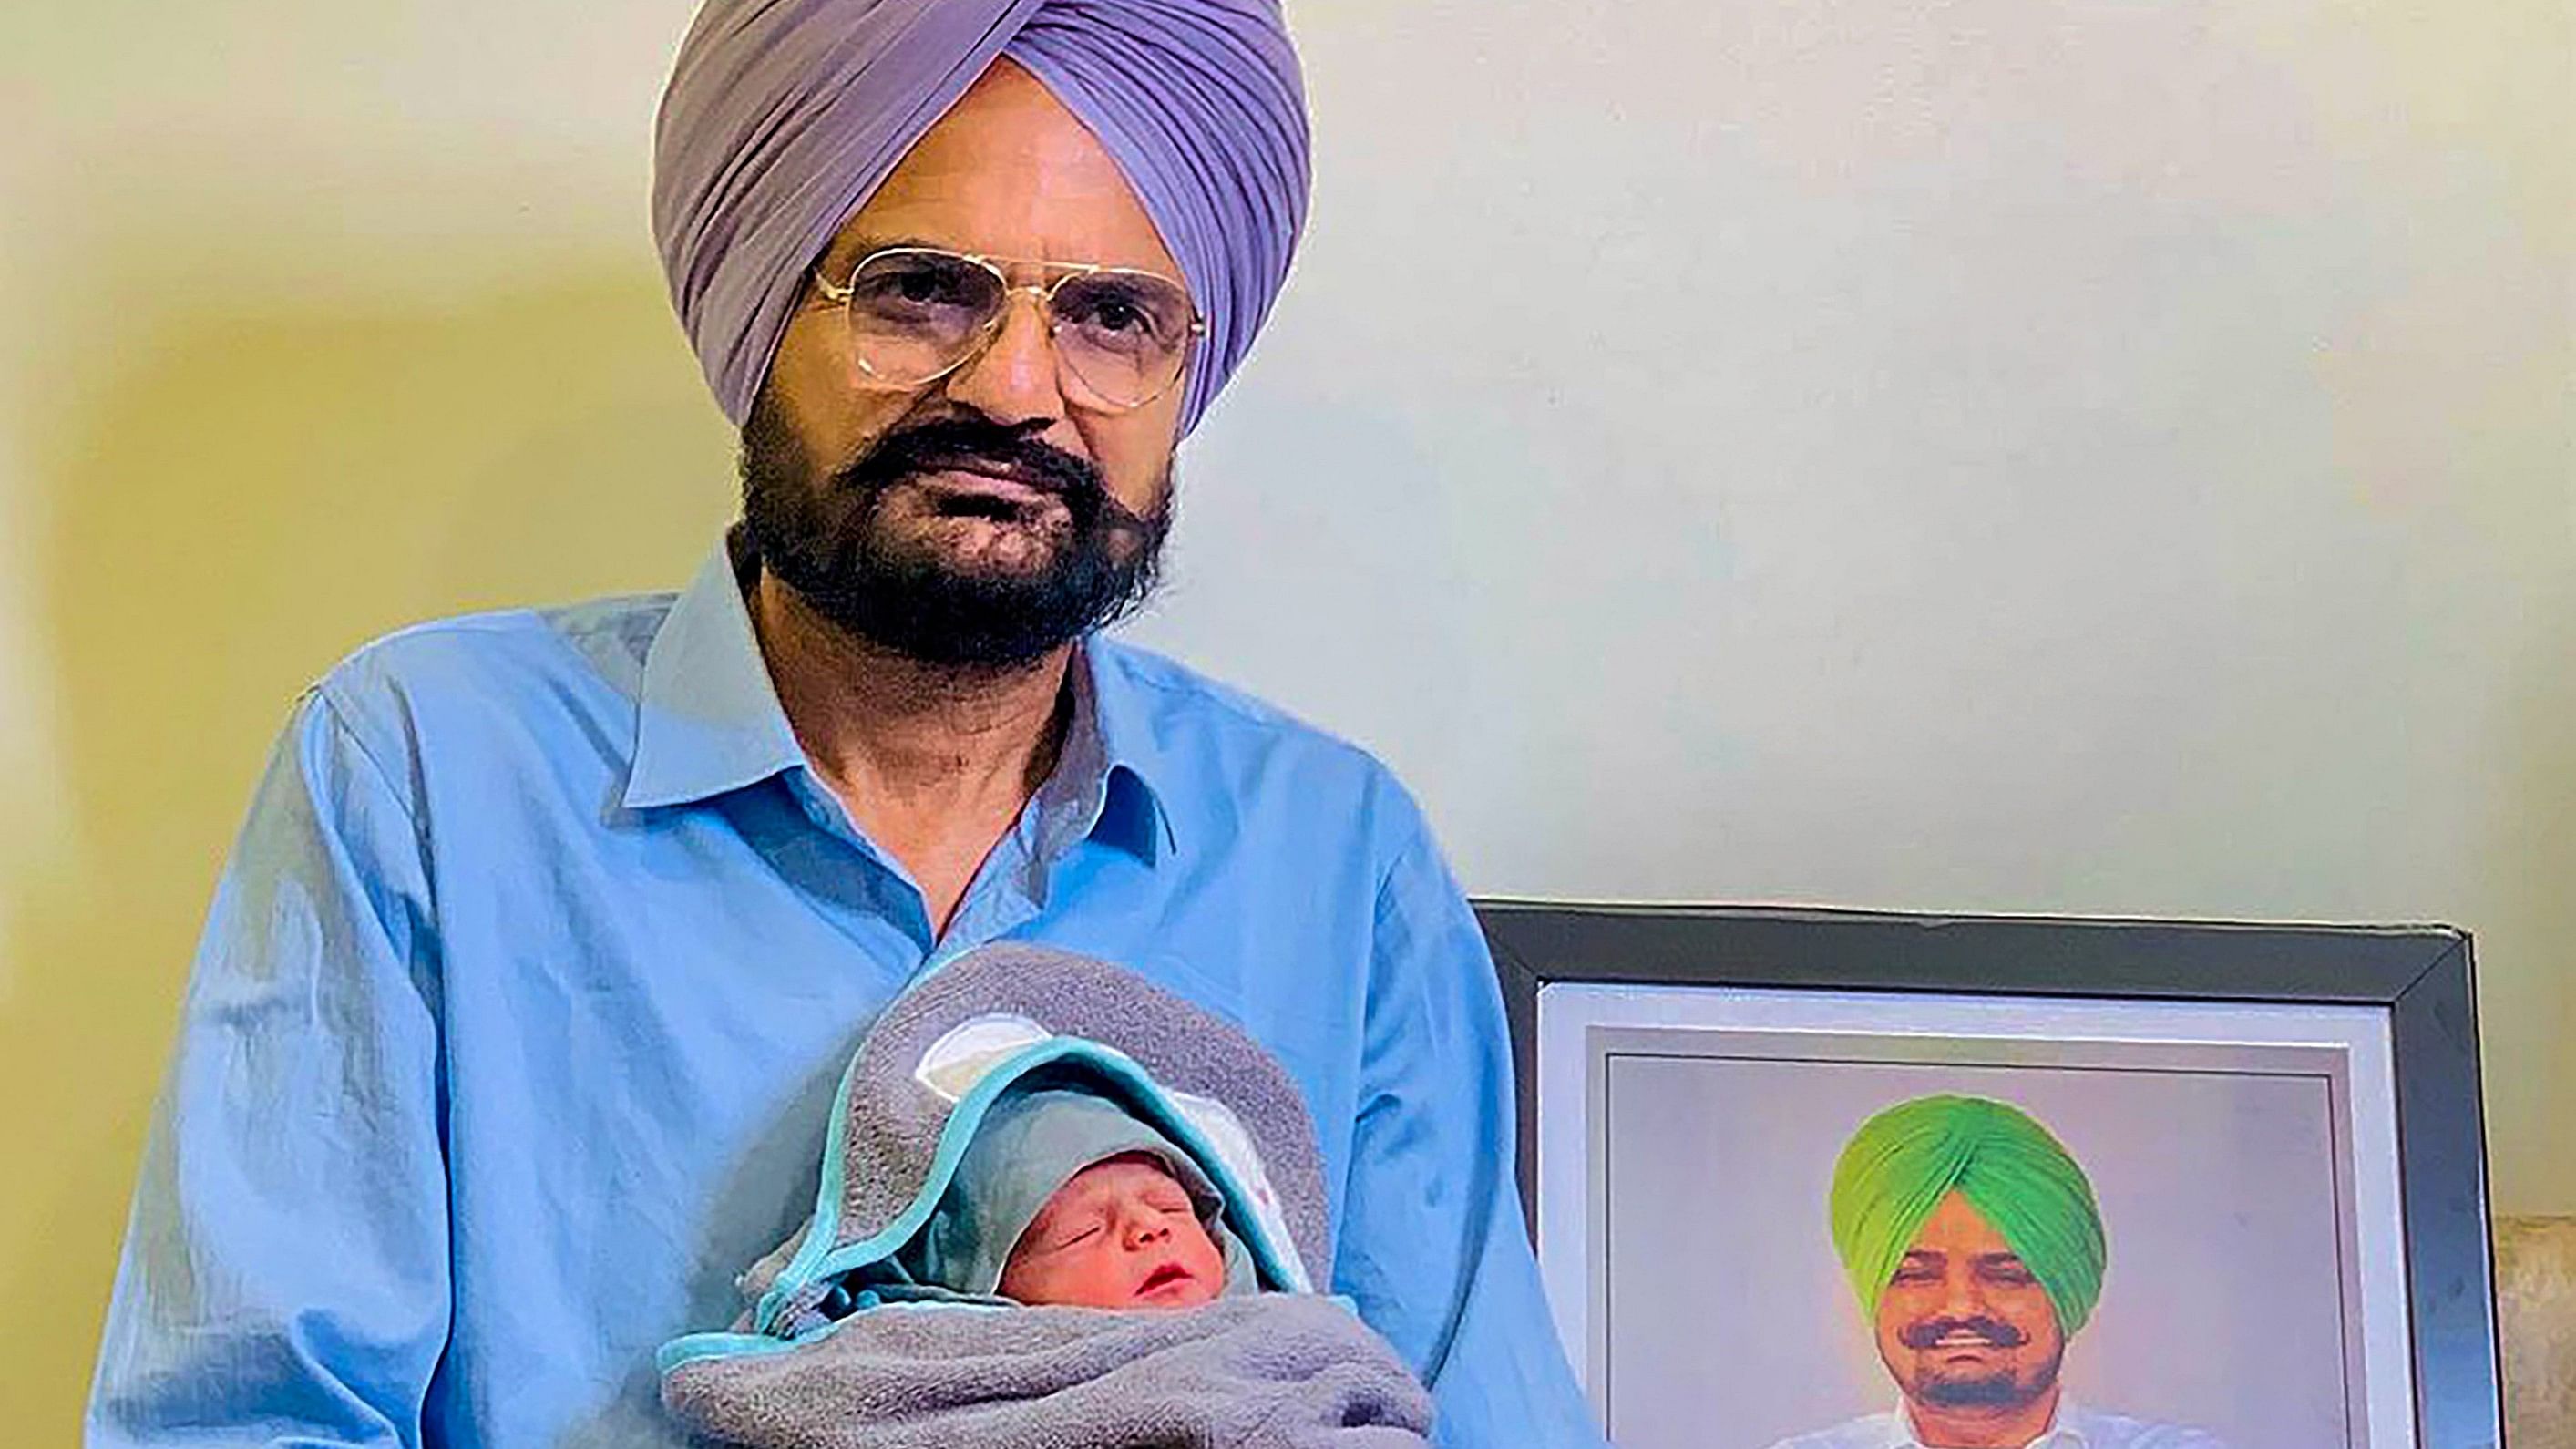 <div class="paragraphs"><p>Balkaur Singh, father of Punjabi singer Sidhu Moosewala, with his newborn baby.</p></div>